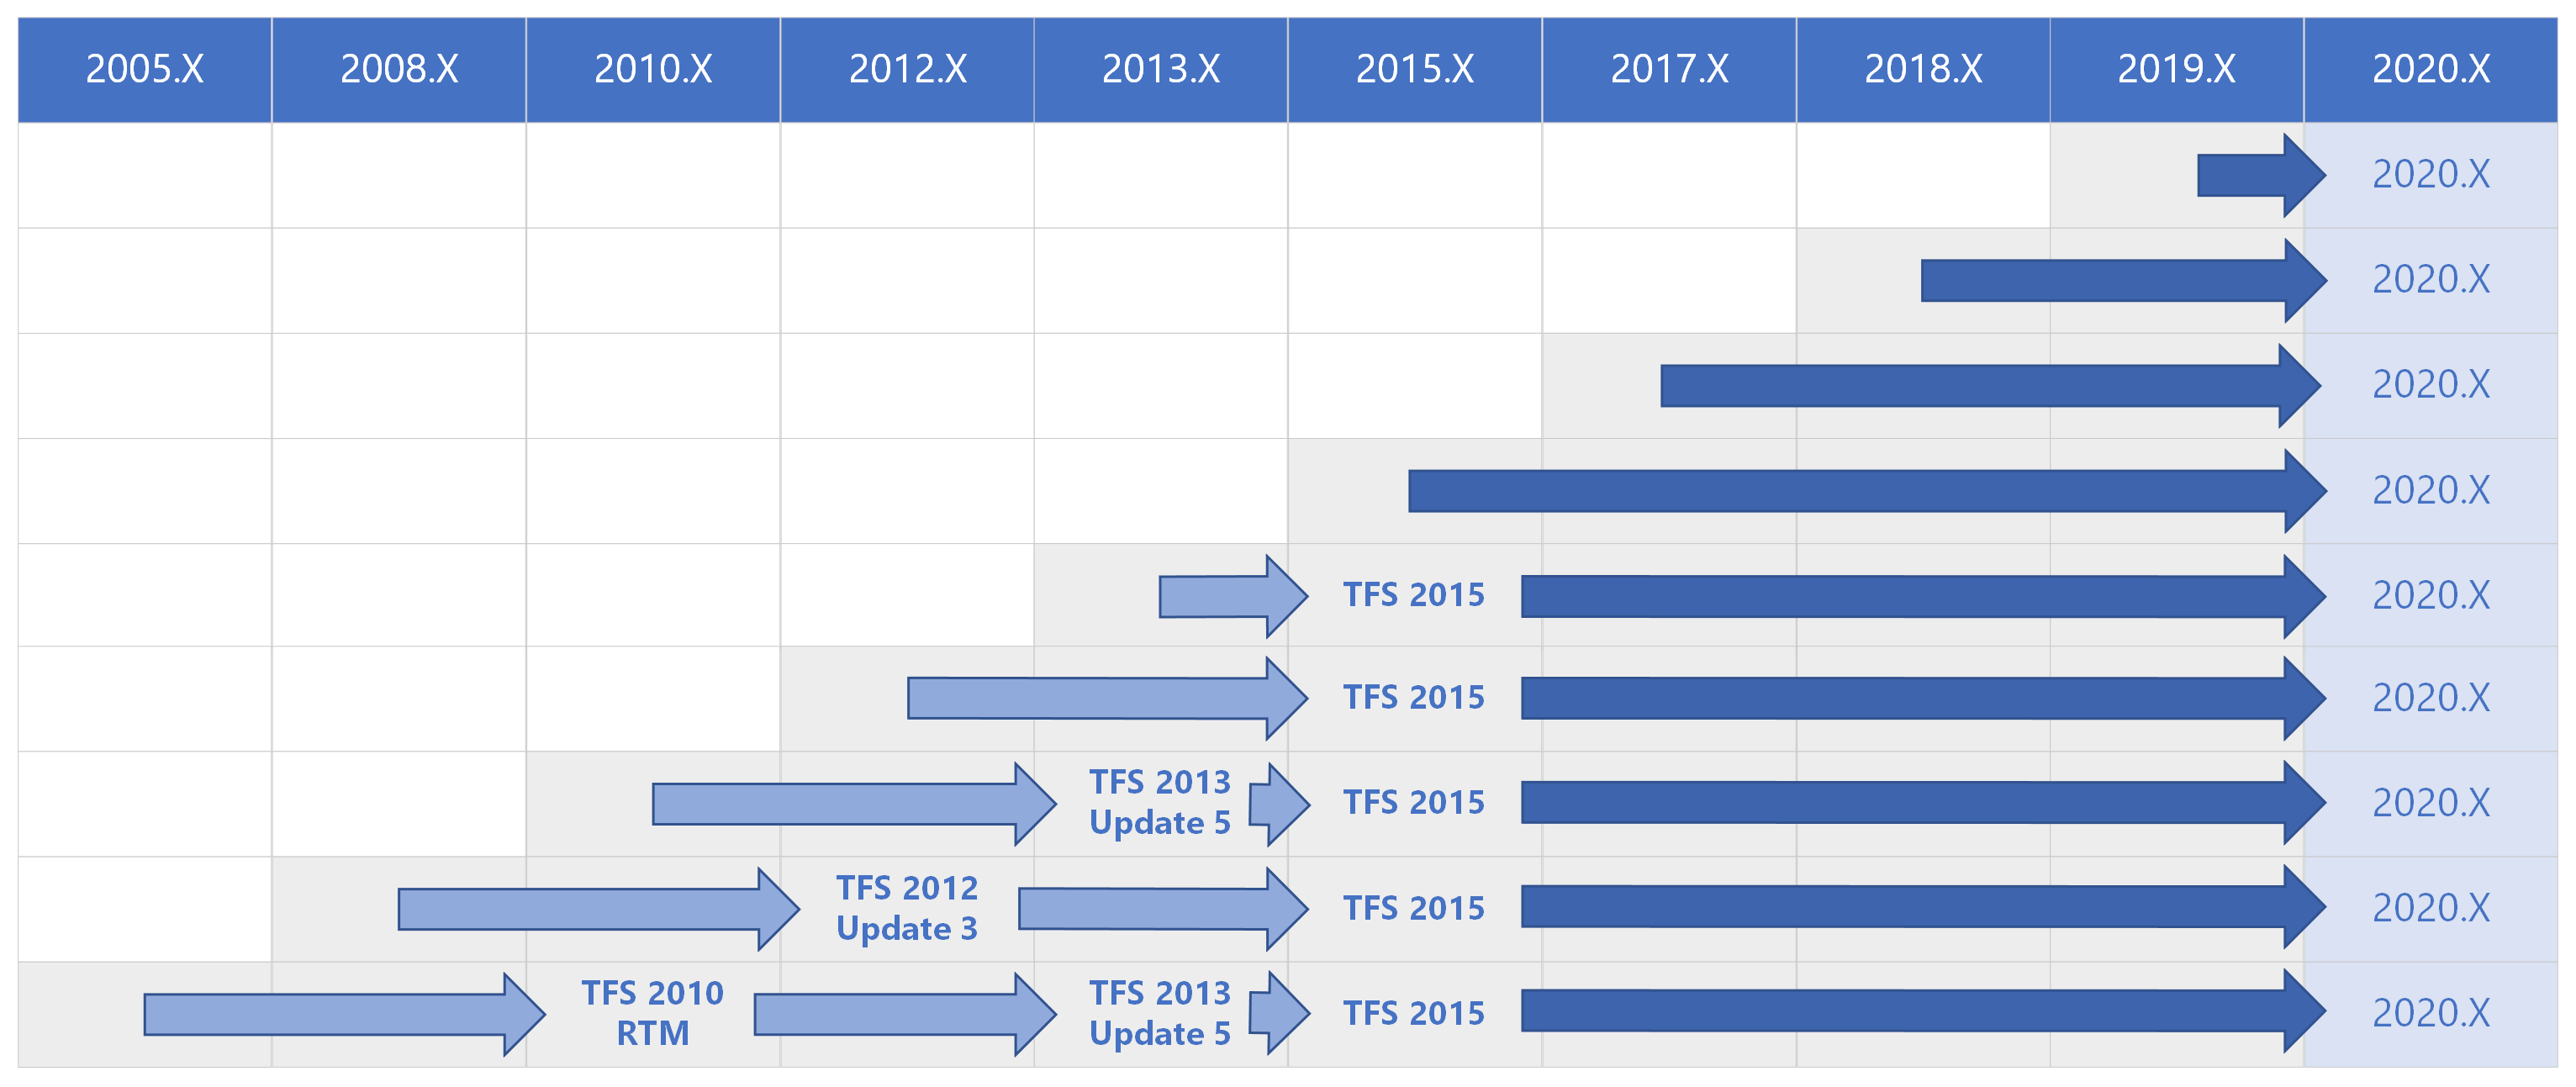 Azure DevOps 2020 Upgrade path matrix for all previous versions.